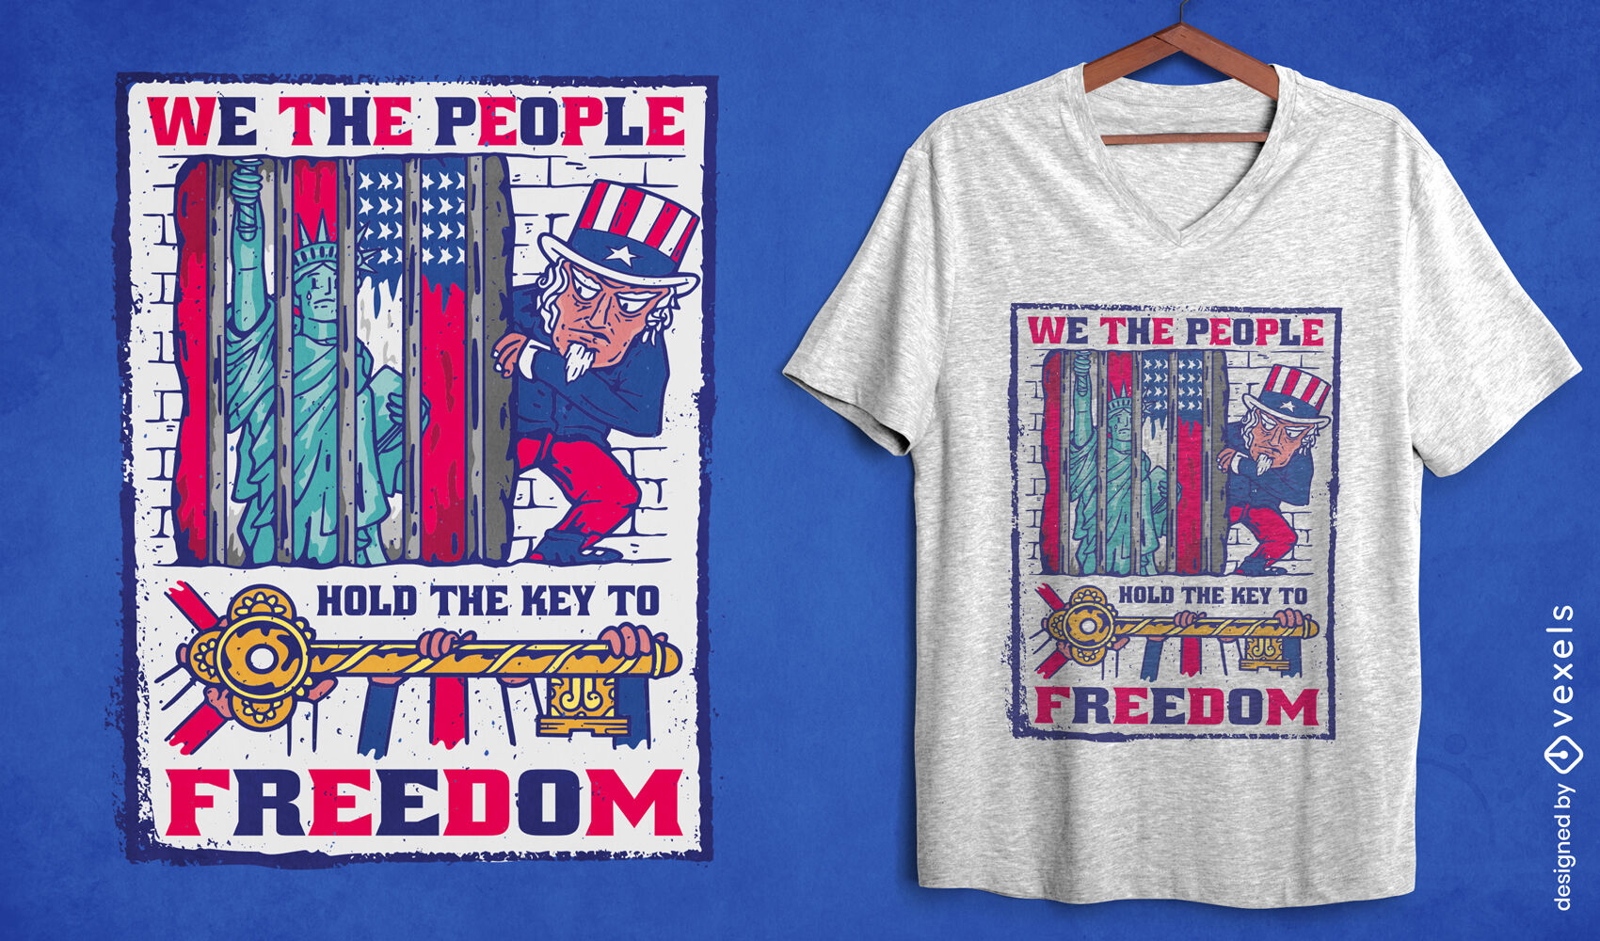 Estatua de la libertad en el diseño de la camiseta de la cárcel.